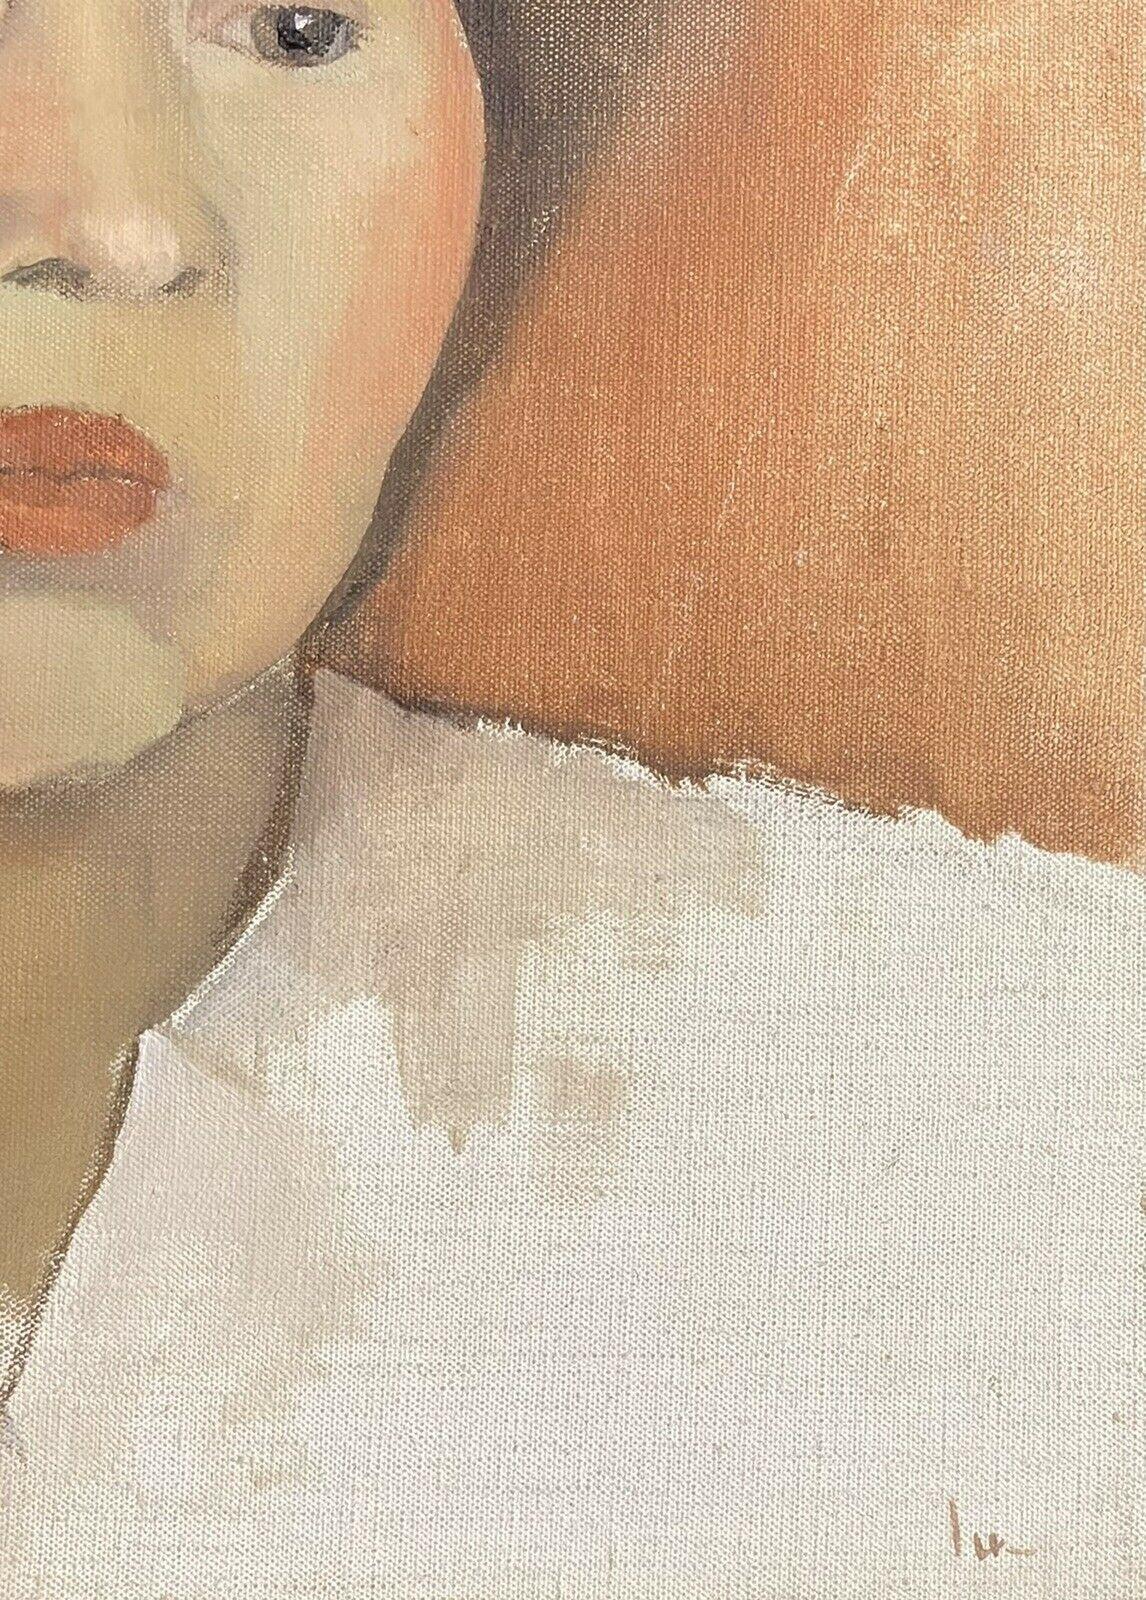 eyebrow lady painting